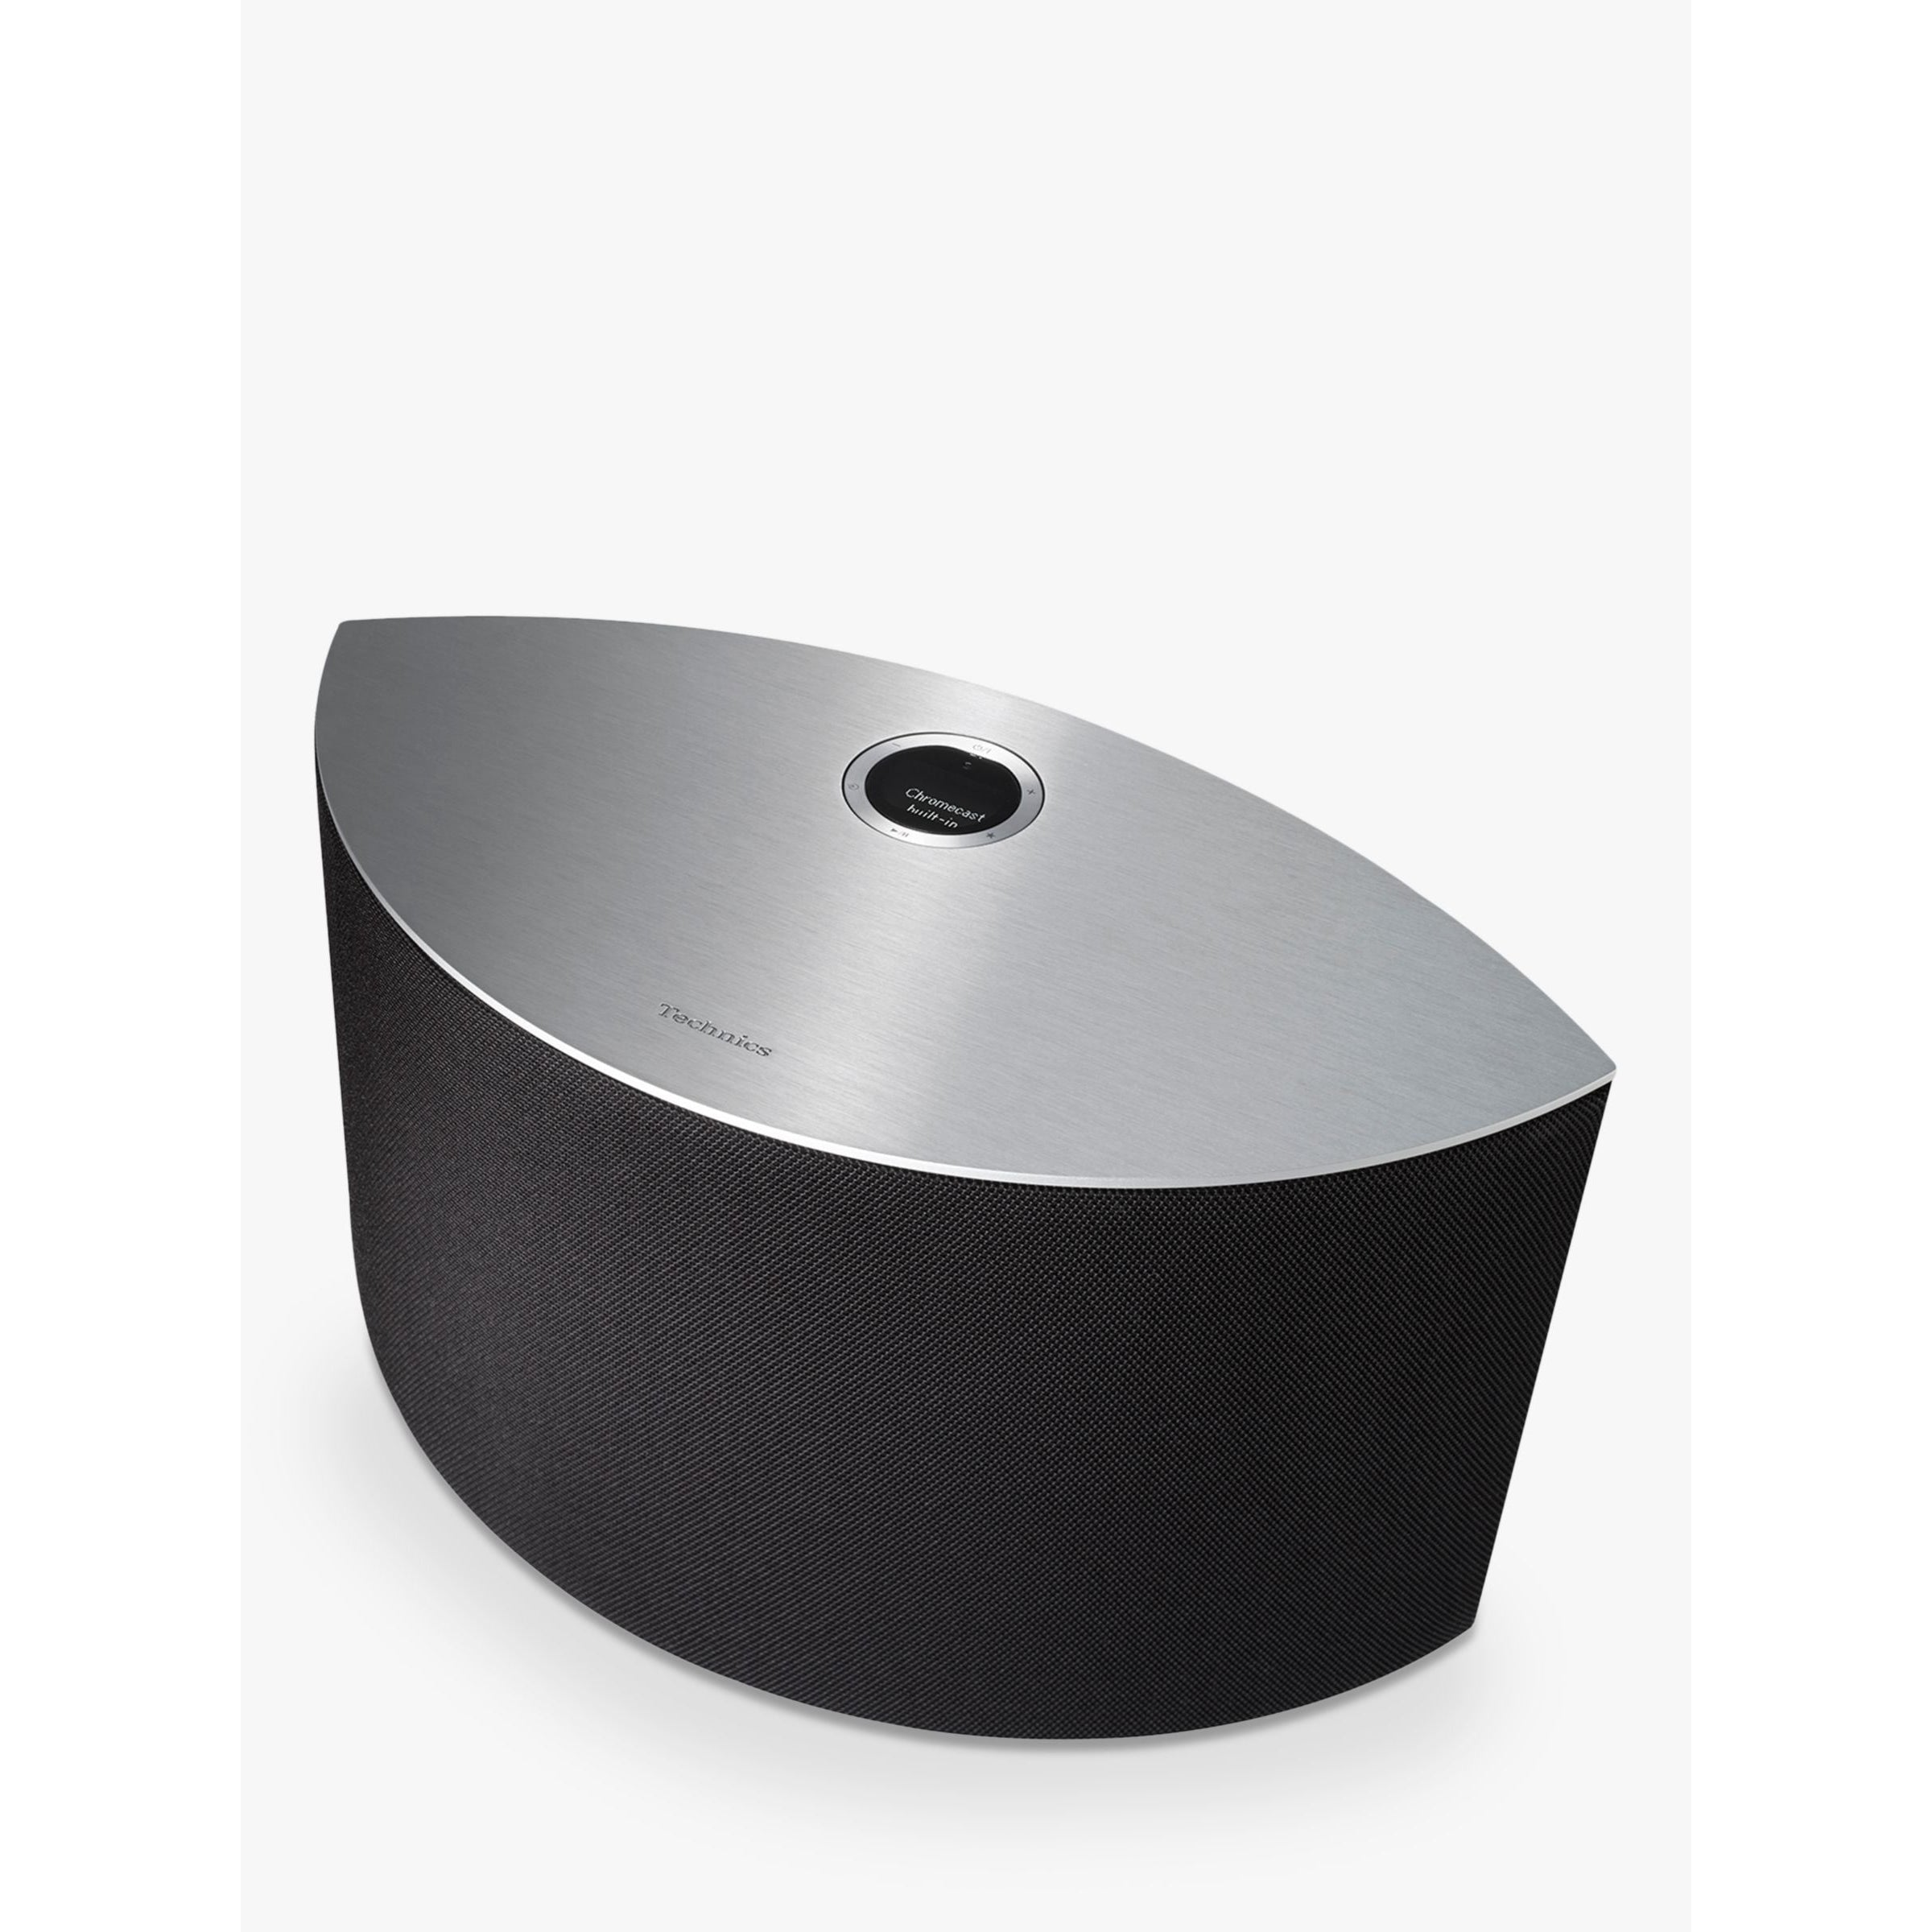 Technics SC-C50 Ottava S Premium Wireless Speaker System with Bluetooth - Black/Silver